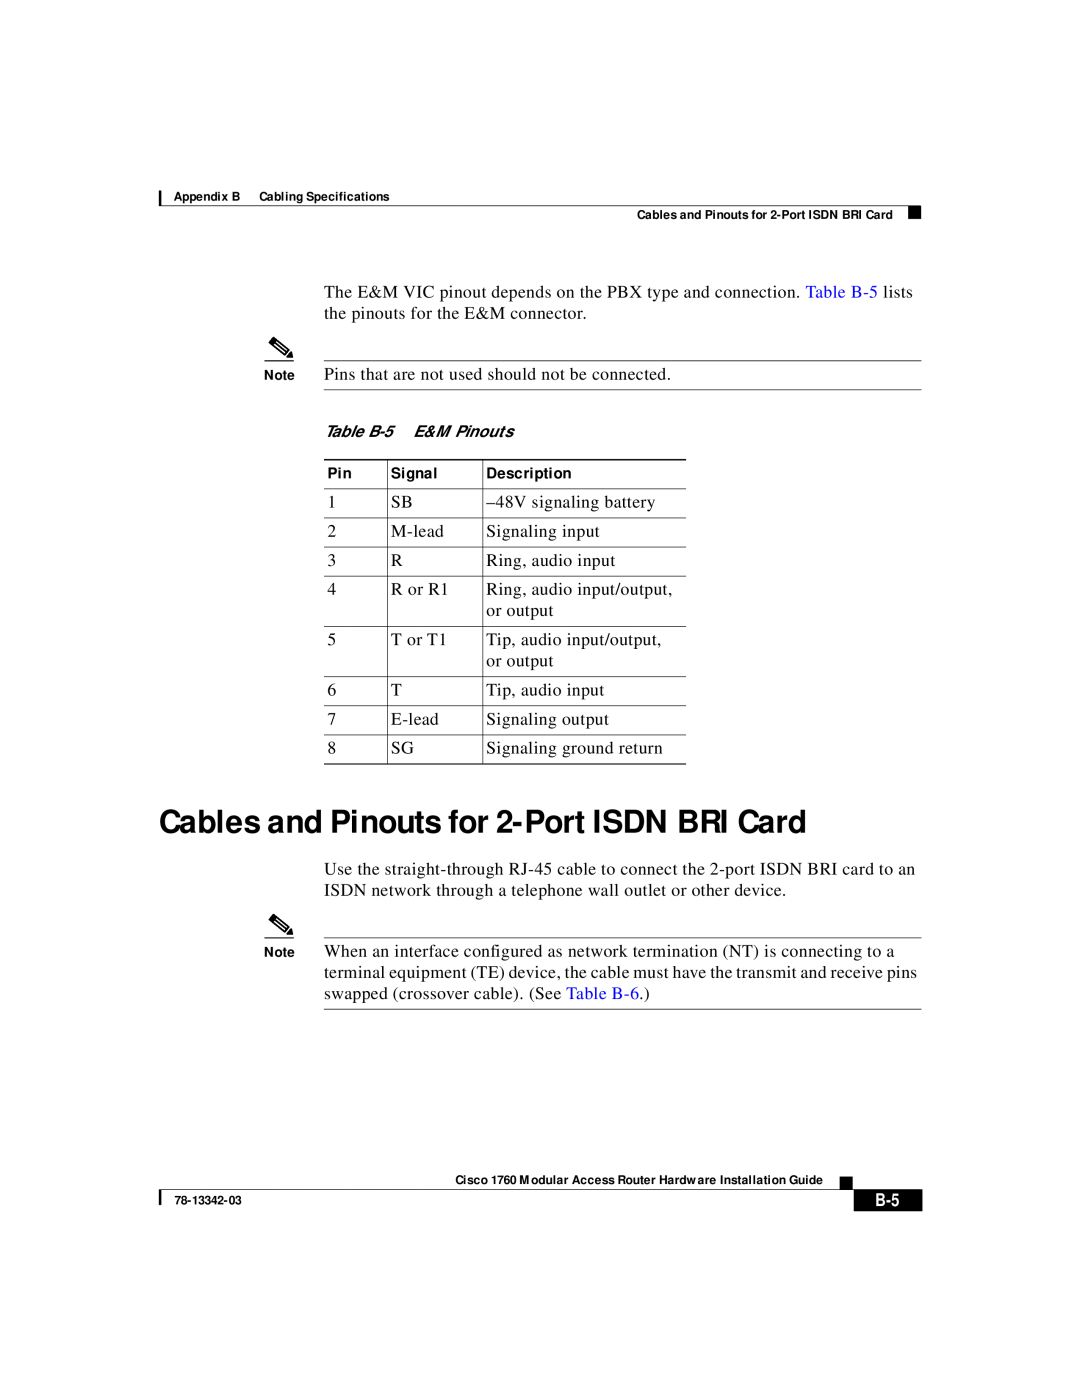 Cisco Systems 78-13342-03 appendix Cables and Pinouts for 2-Port ISDN BRI Card, Description, Signal 